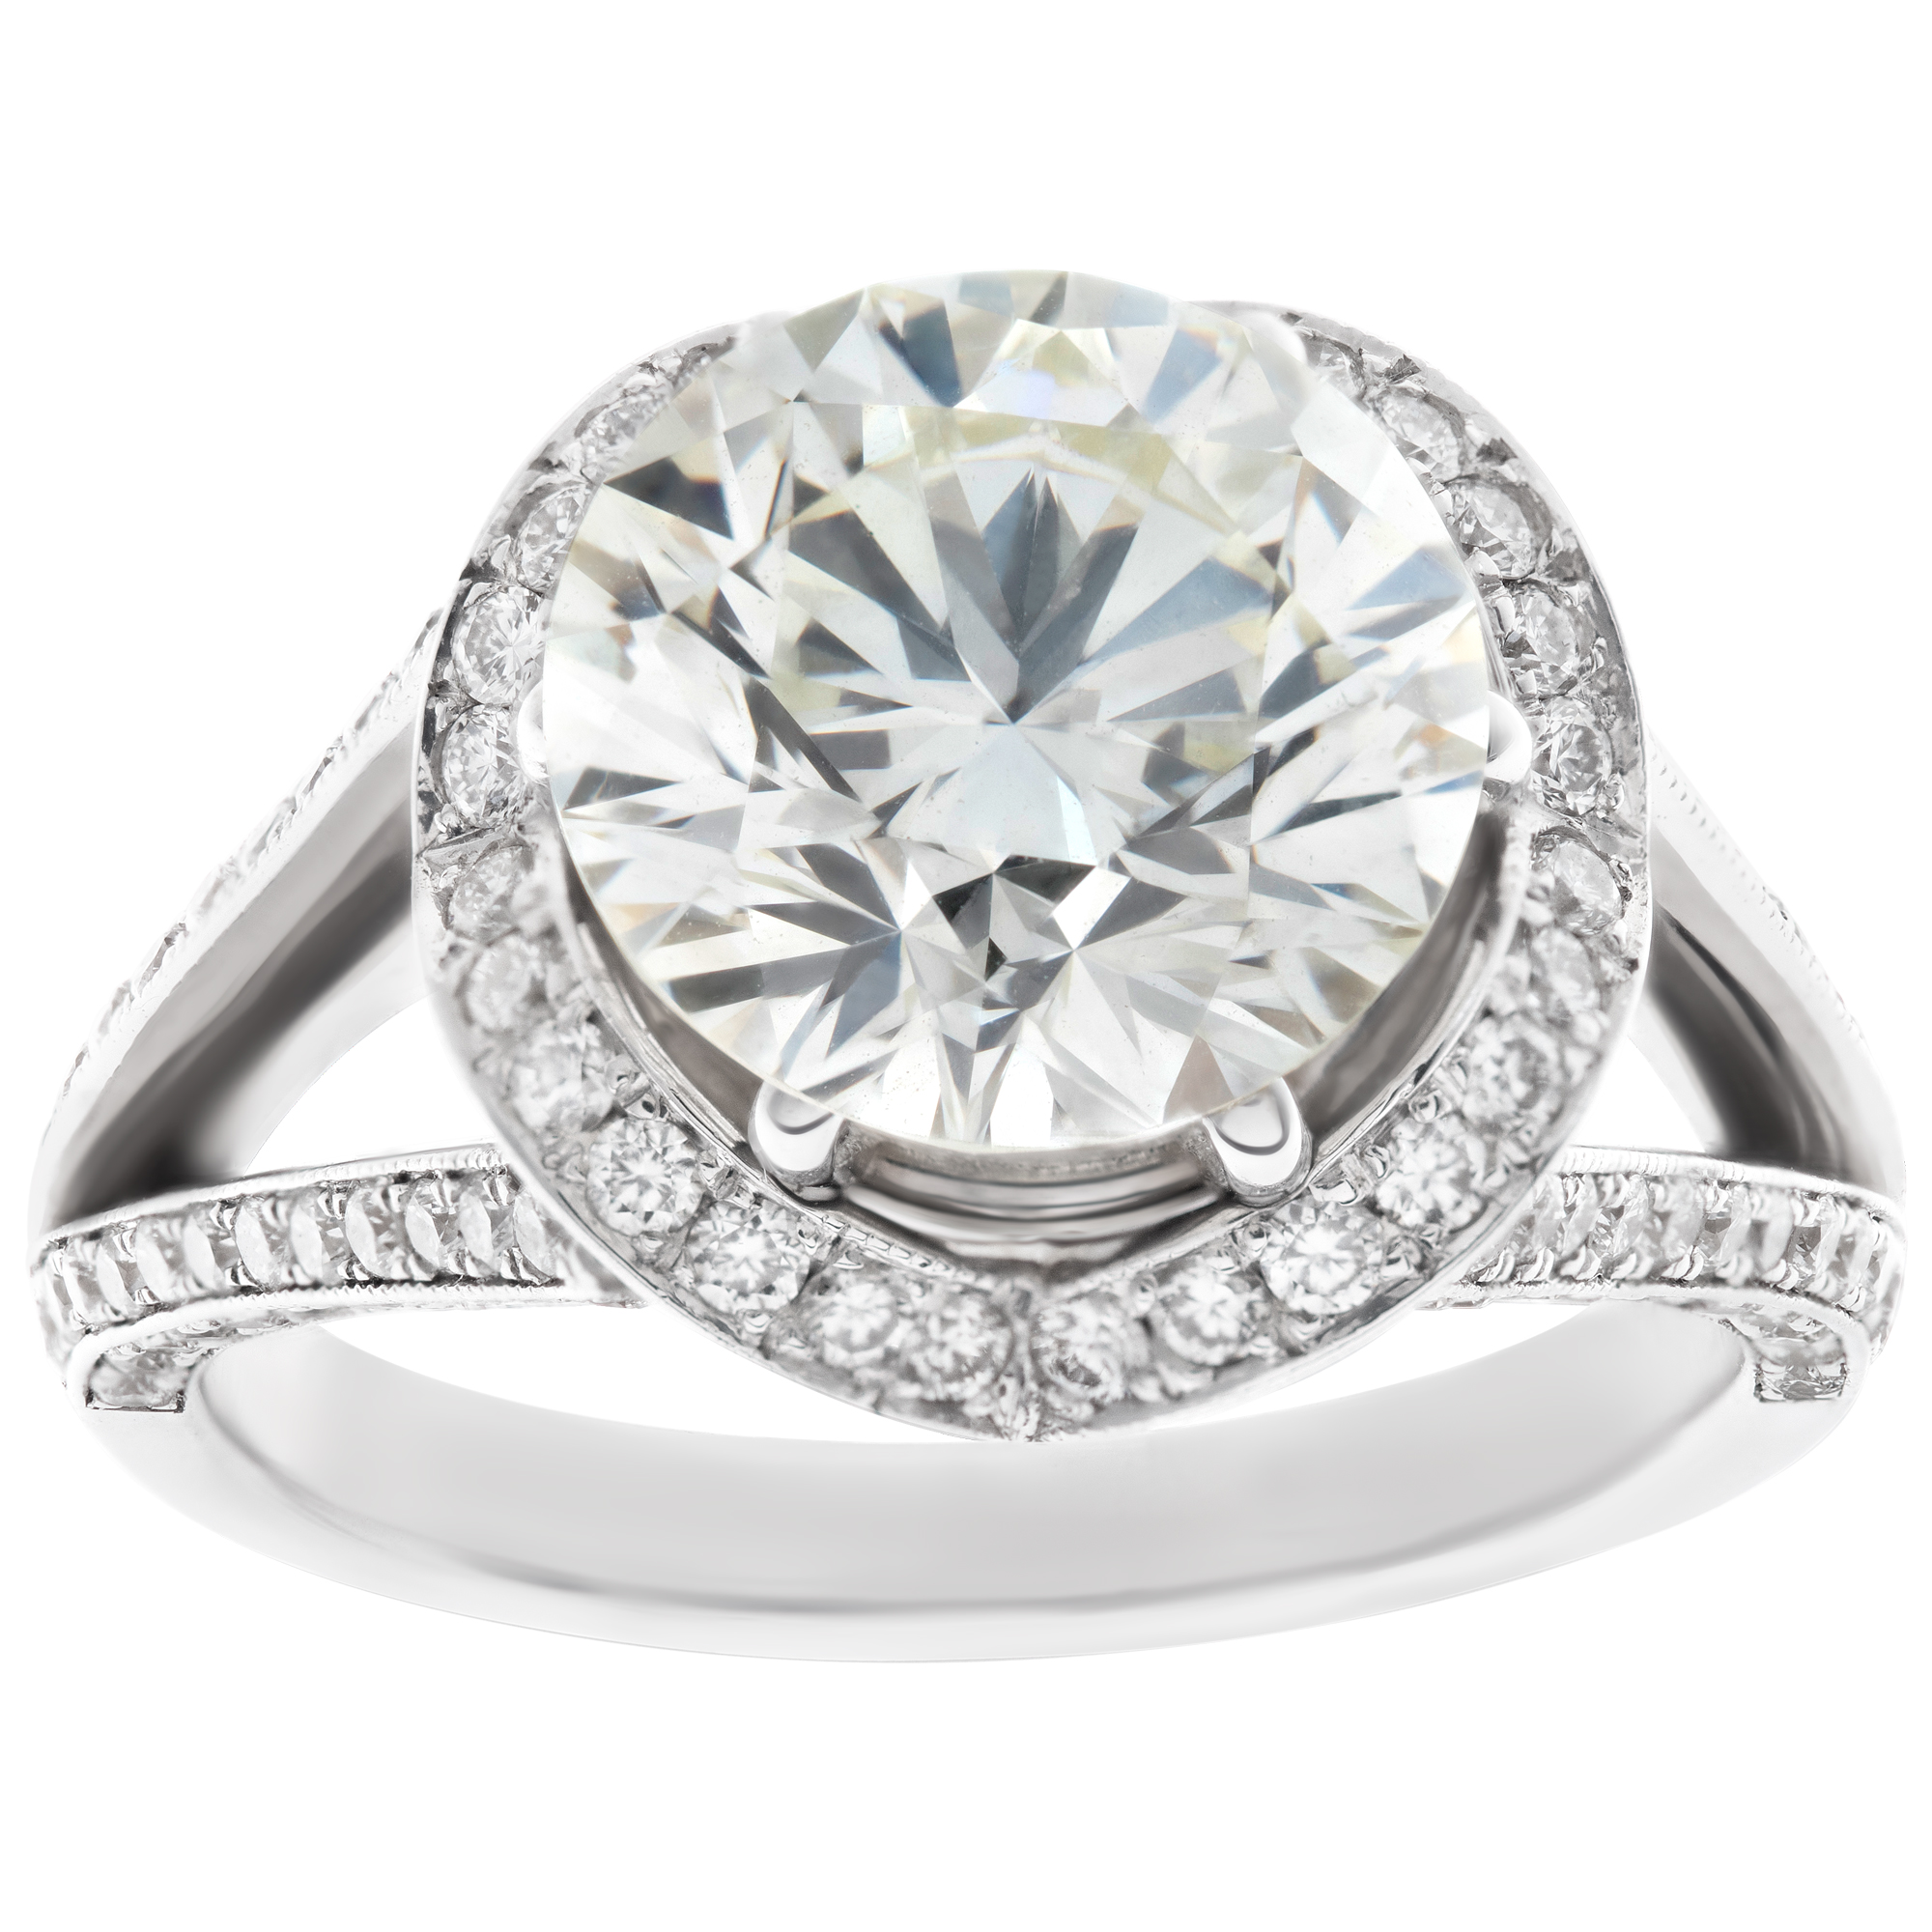 GIA certified round brilliant cut diamond 4.04 carat (M color, VS1 clarity) ring image 1